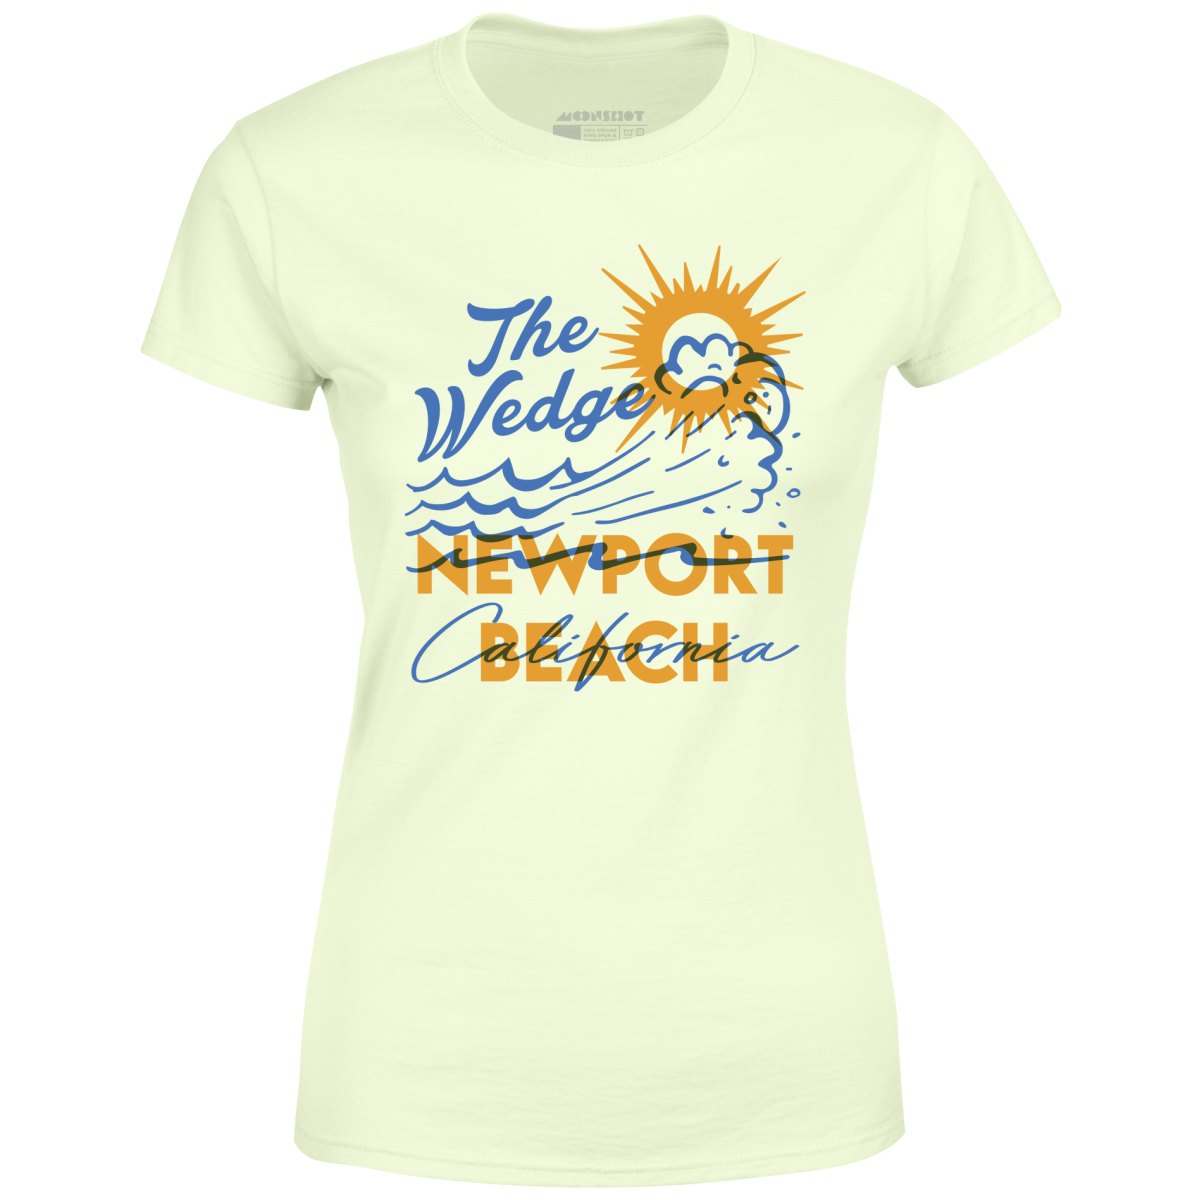 The Wedge - Newport Beach, CA - Women's T-Shirt